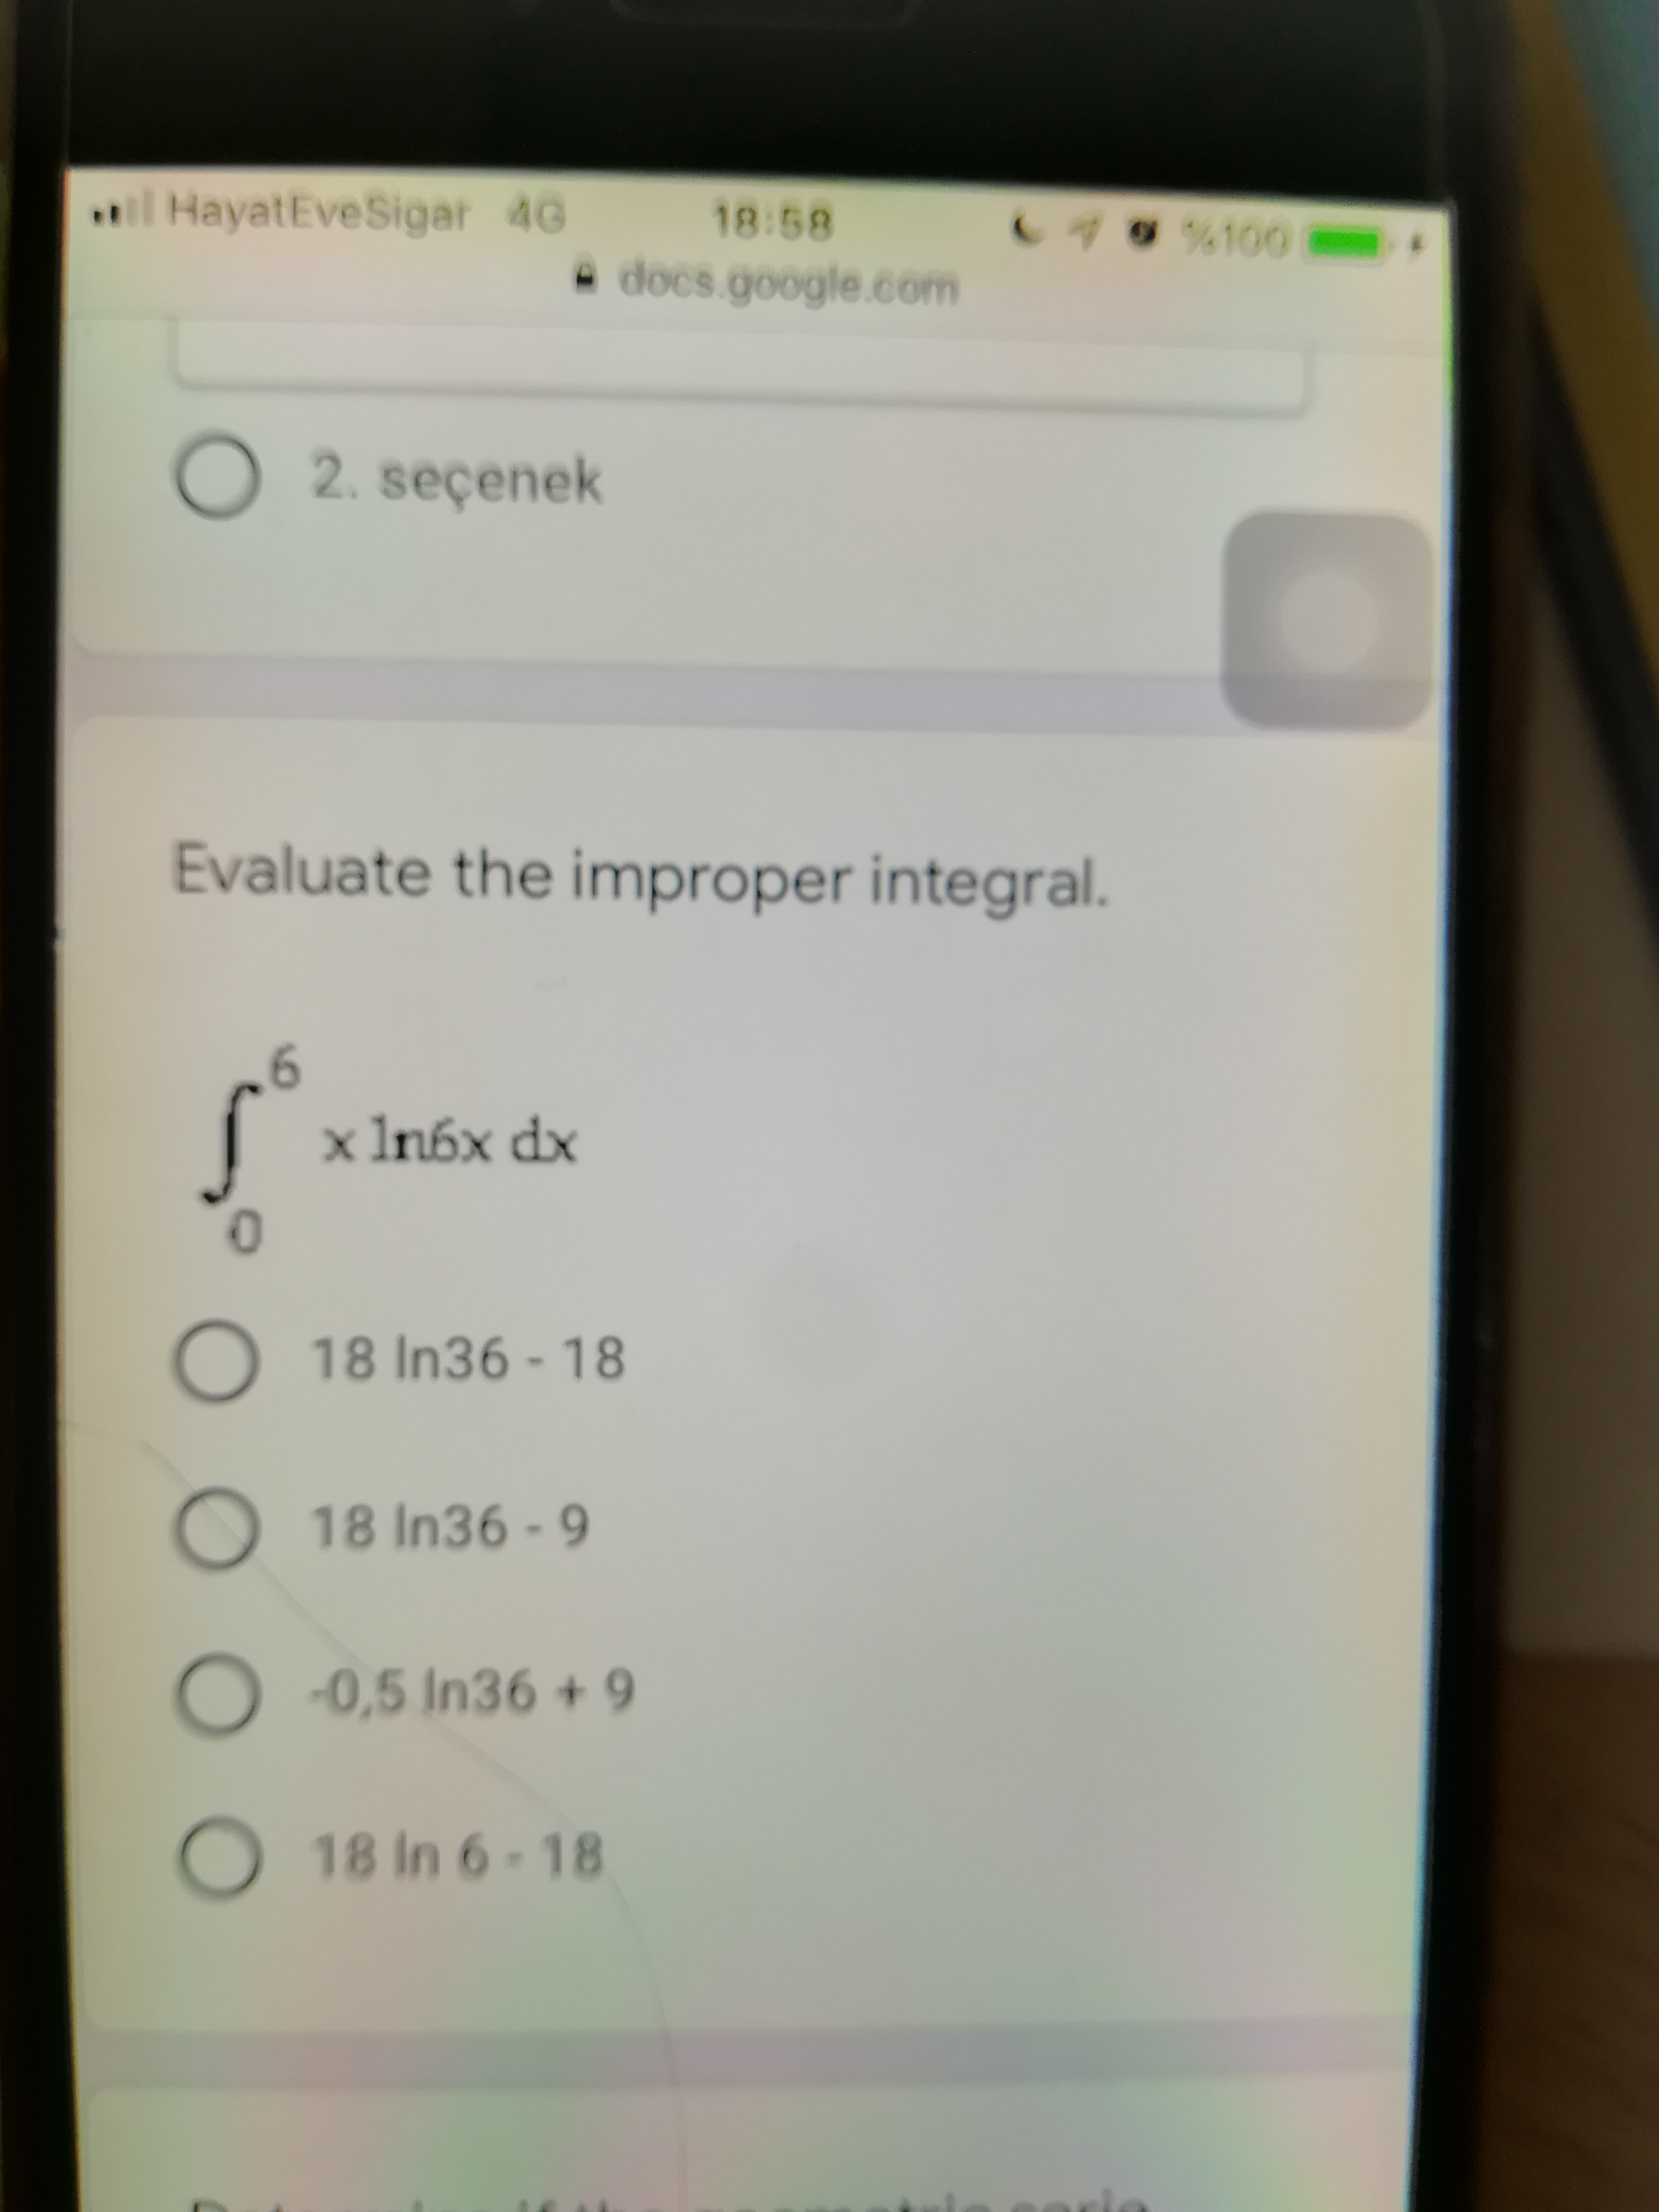 Evaluate the improper integral.
x In6x dx
0.
